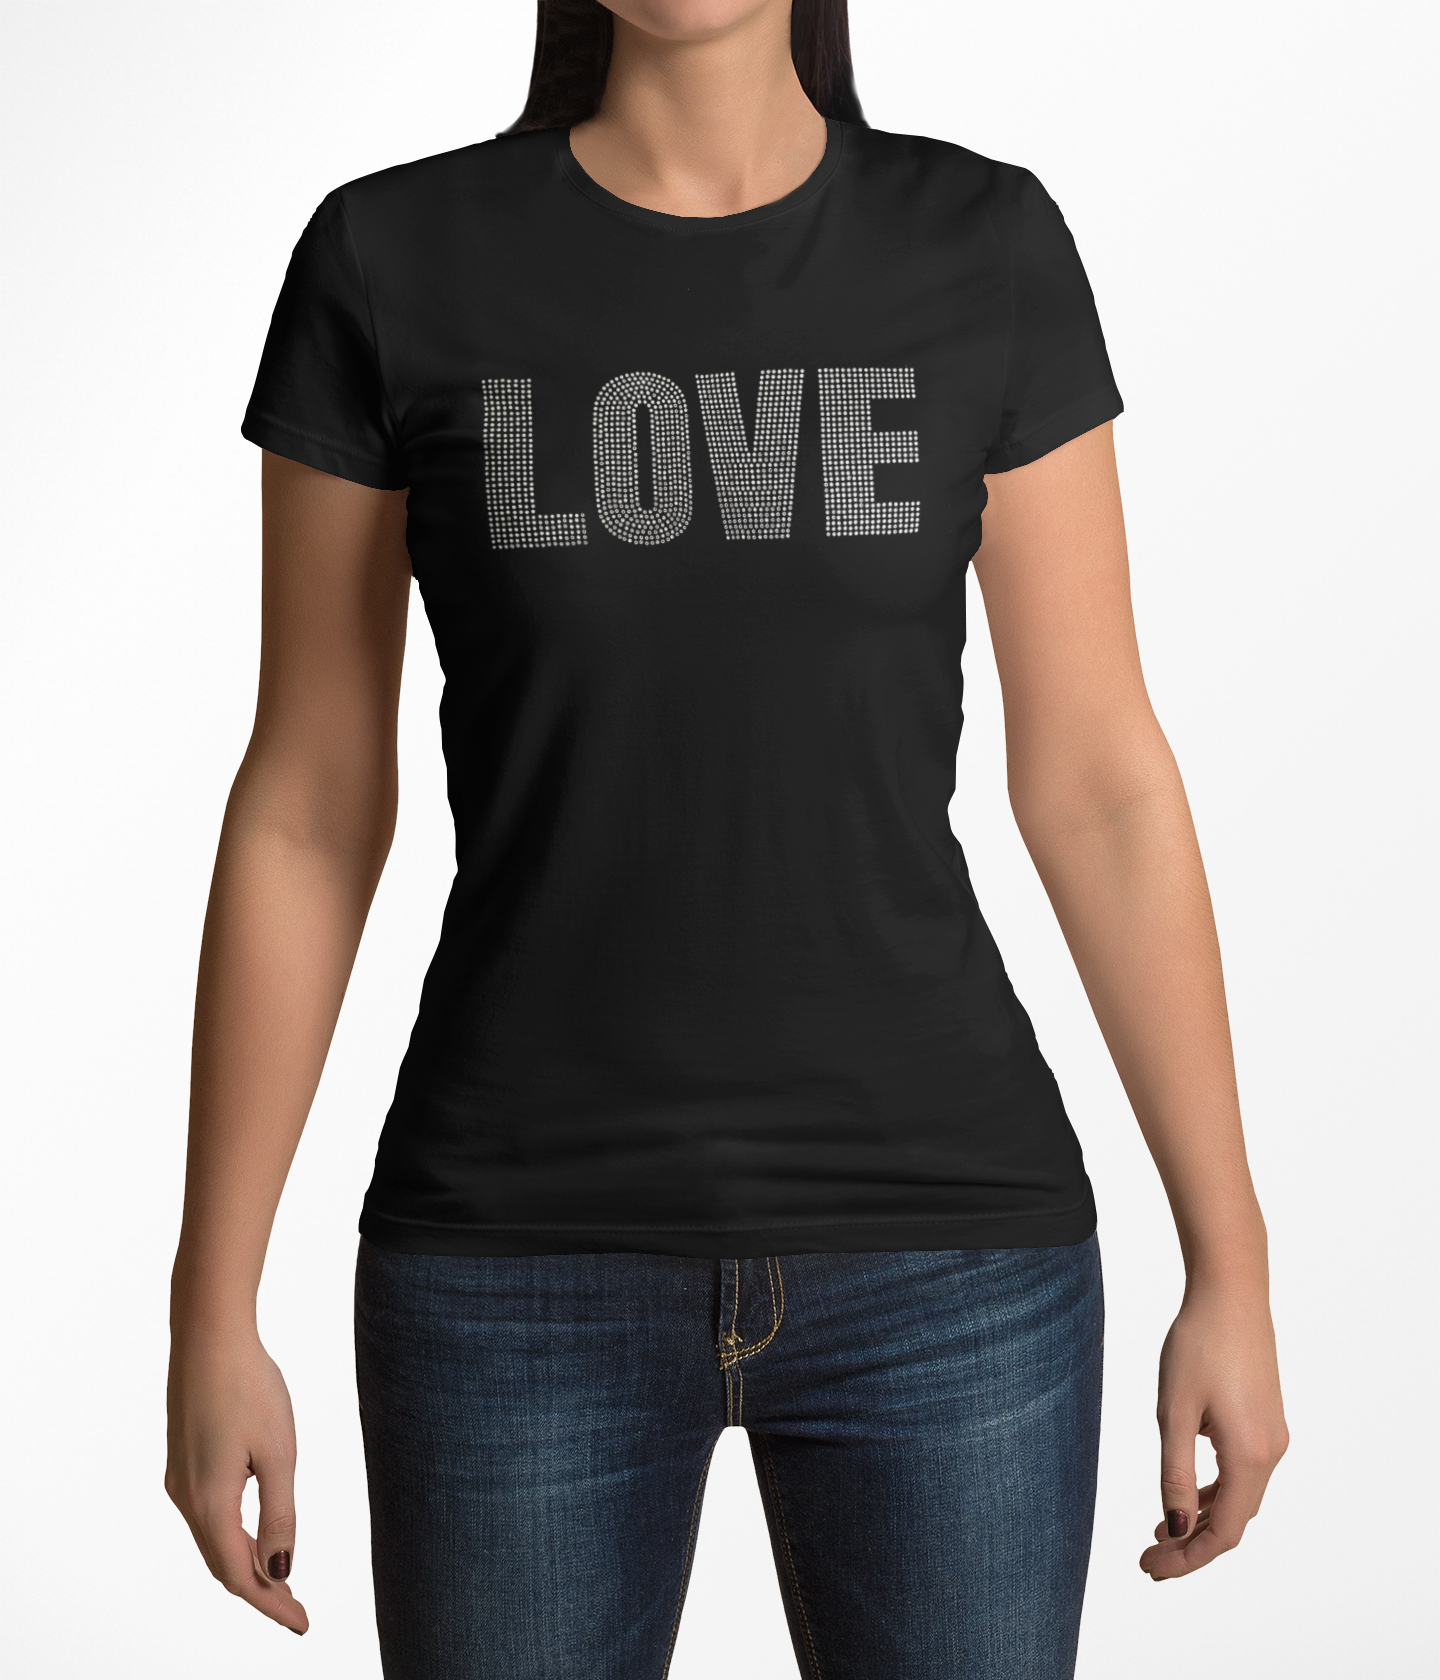 Love Rhinestone Black Crew Neck Women's T-Shirts